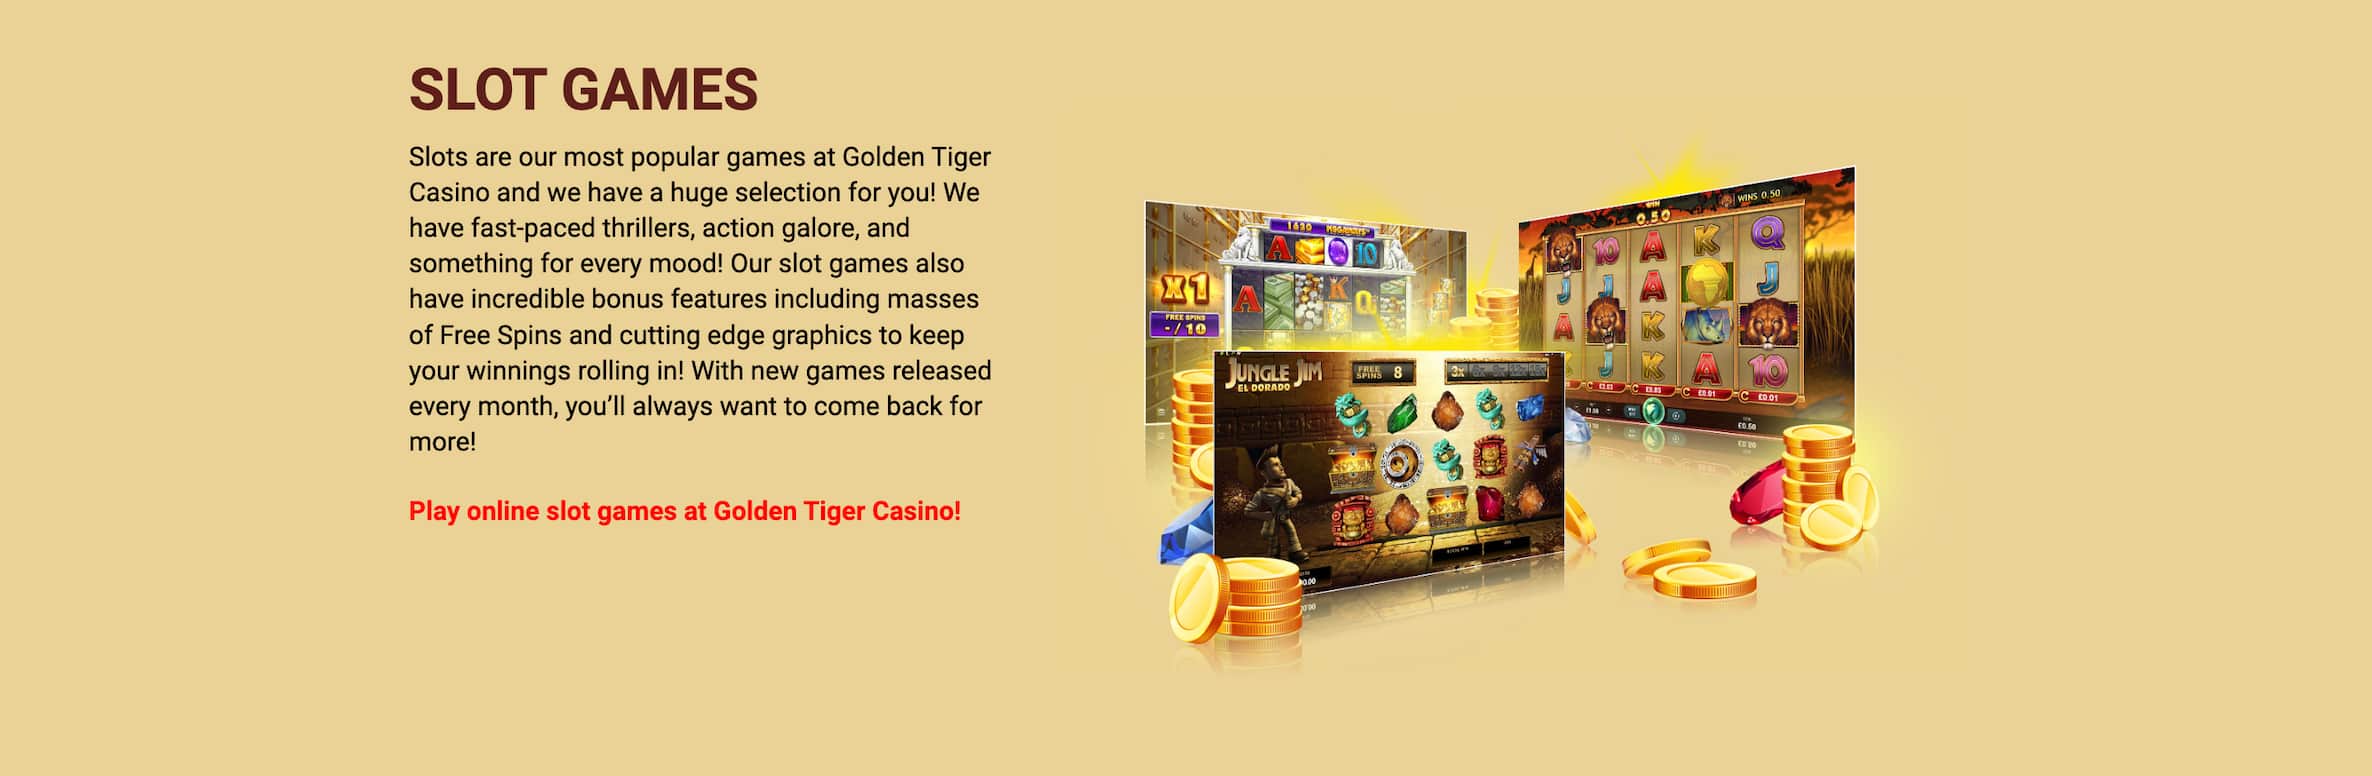 golden tiger slots